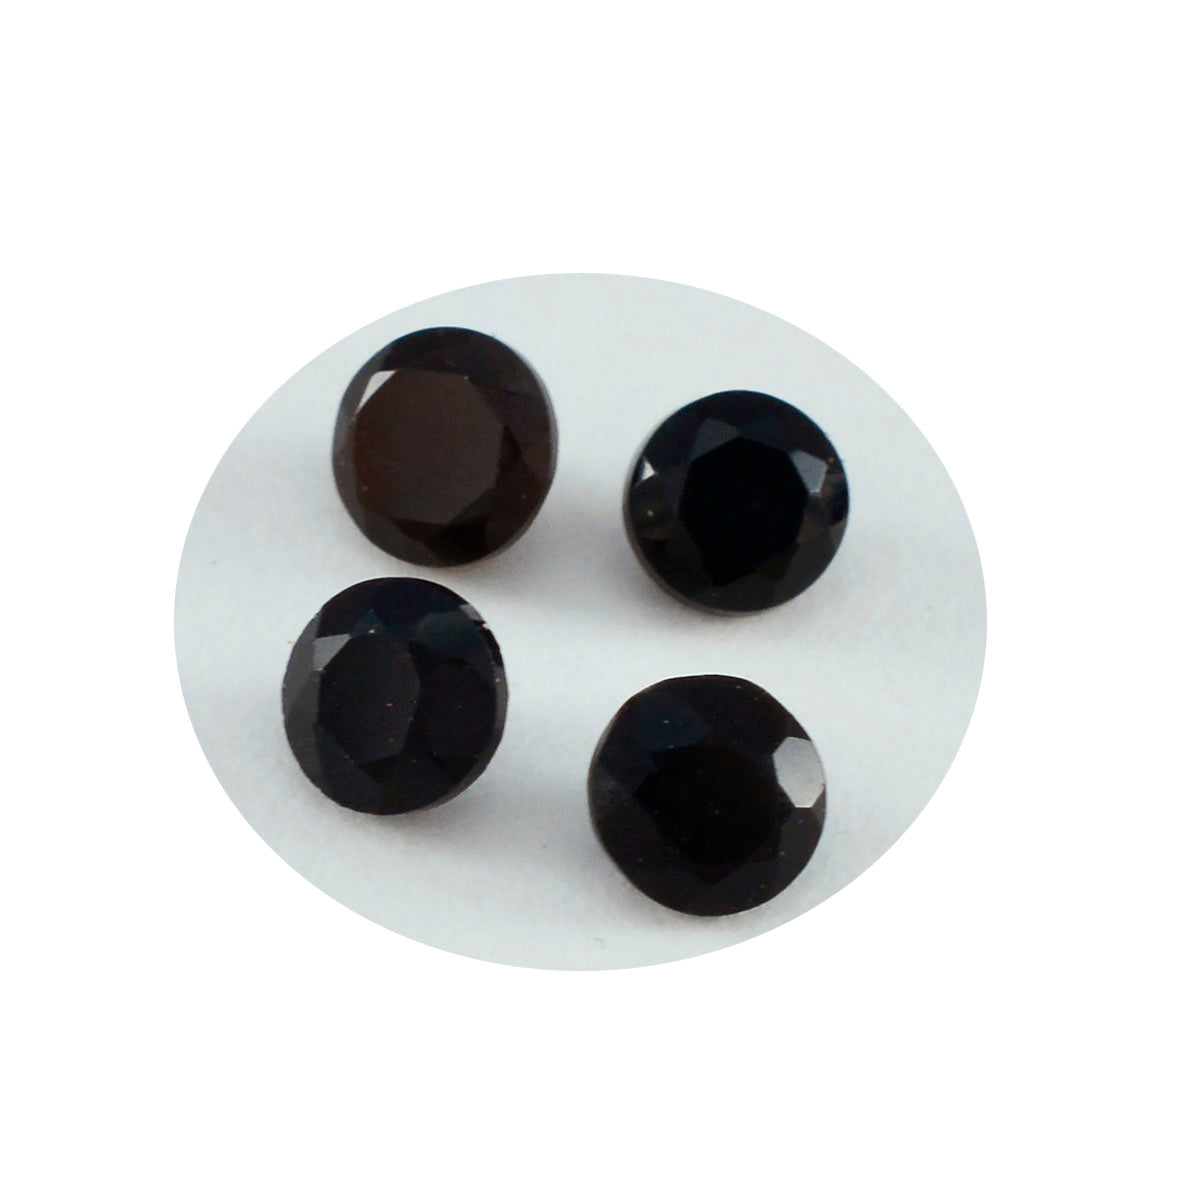 Riyogems 1PC Natural Black Onyx Faceted 4X4 mm Round Shape beautiful Quality Loose Gemstone